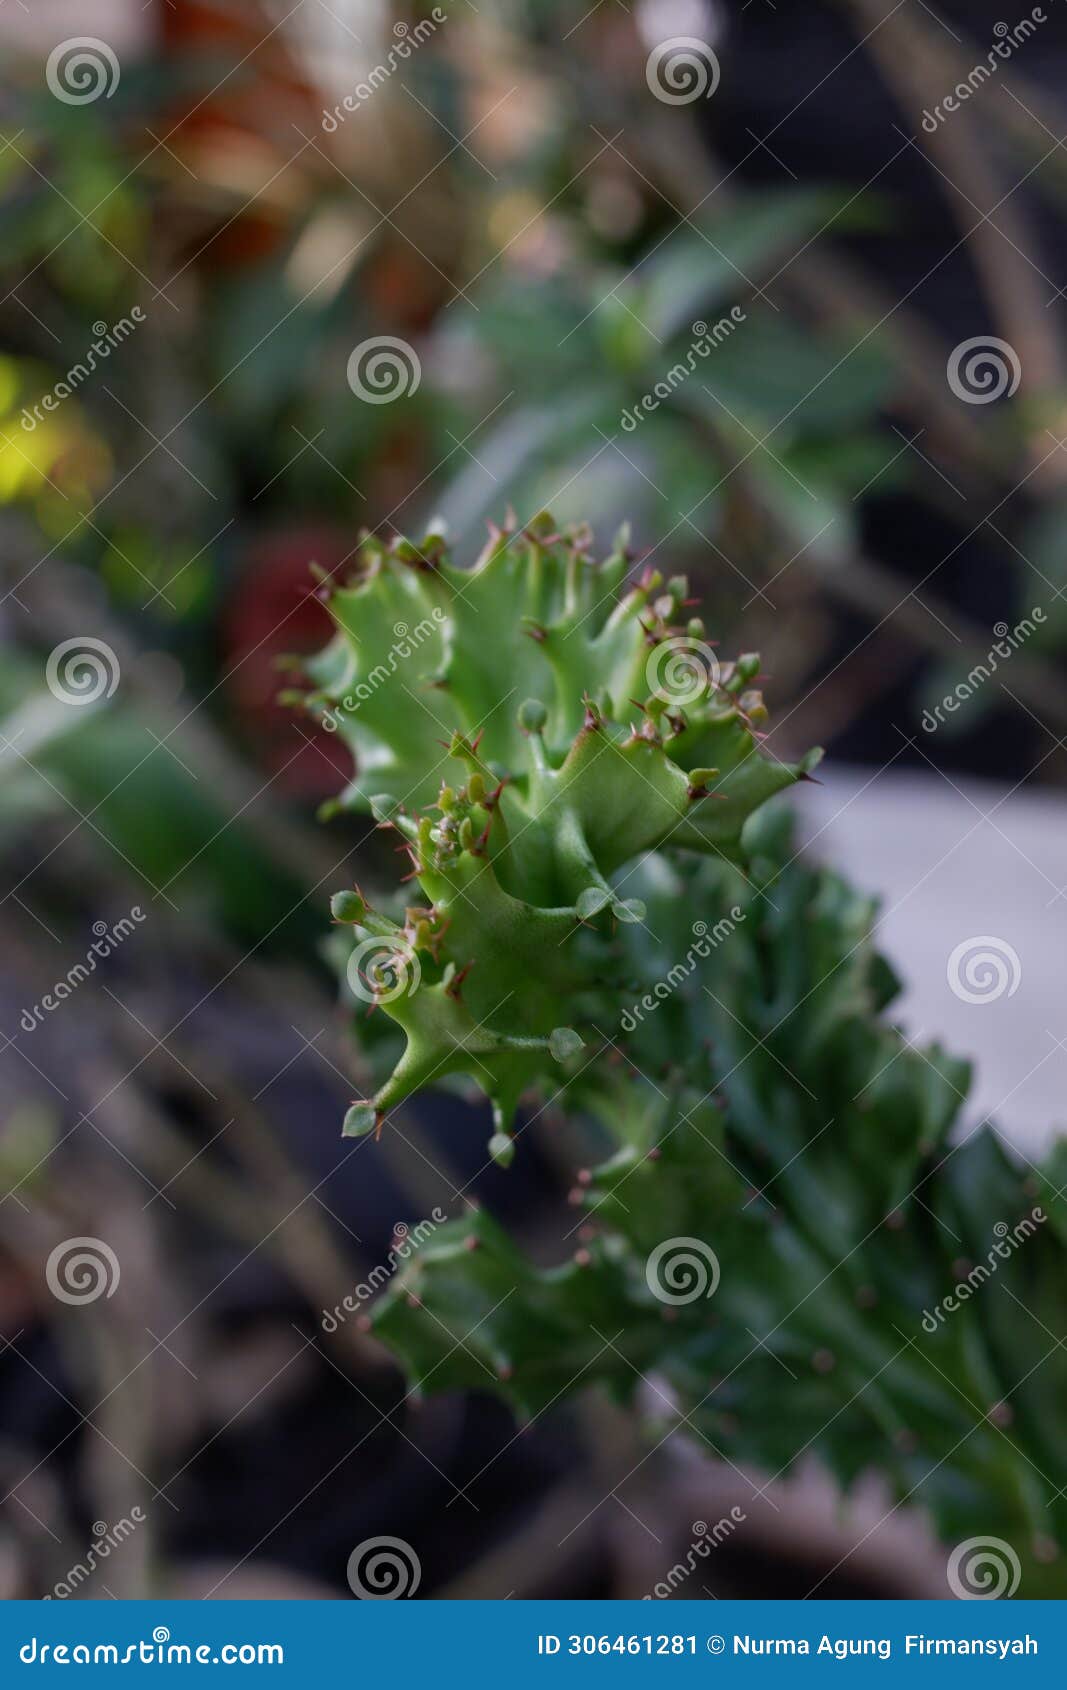 a cactus euphorbia lactea plant